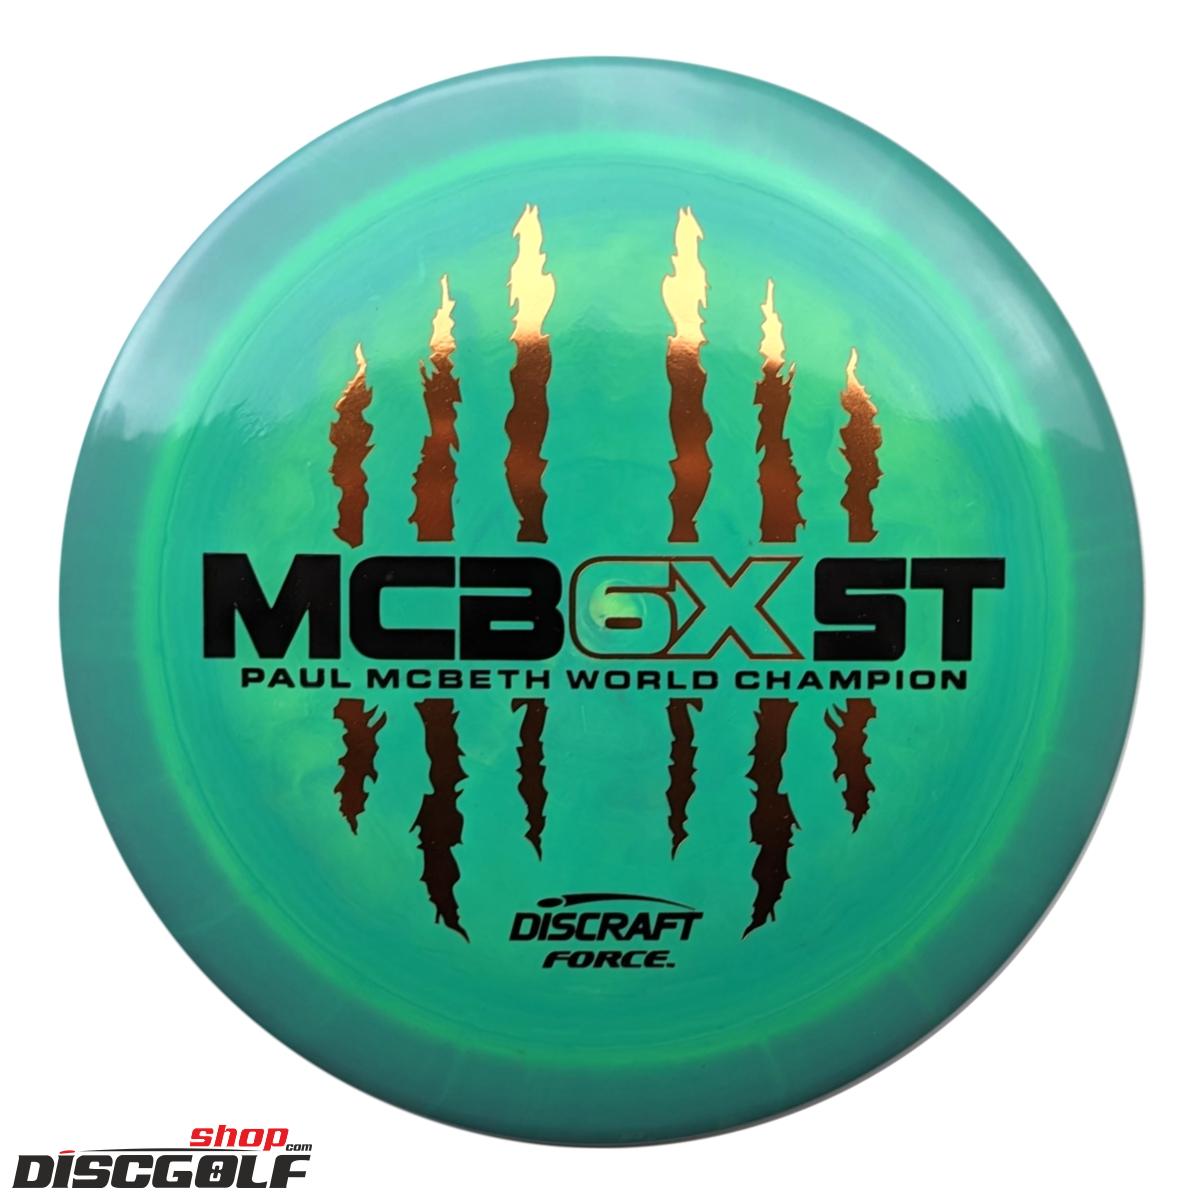 Discraft Force ESP Paul McBeth MCB6xST Special Edition (discgolf)